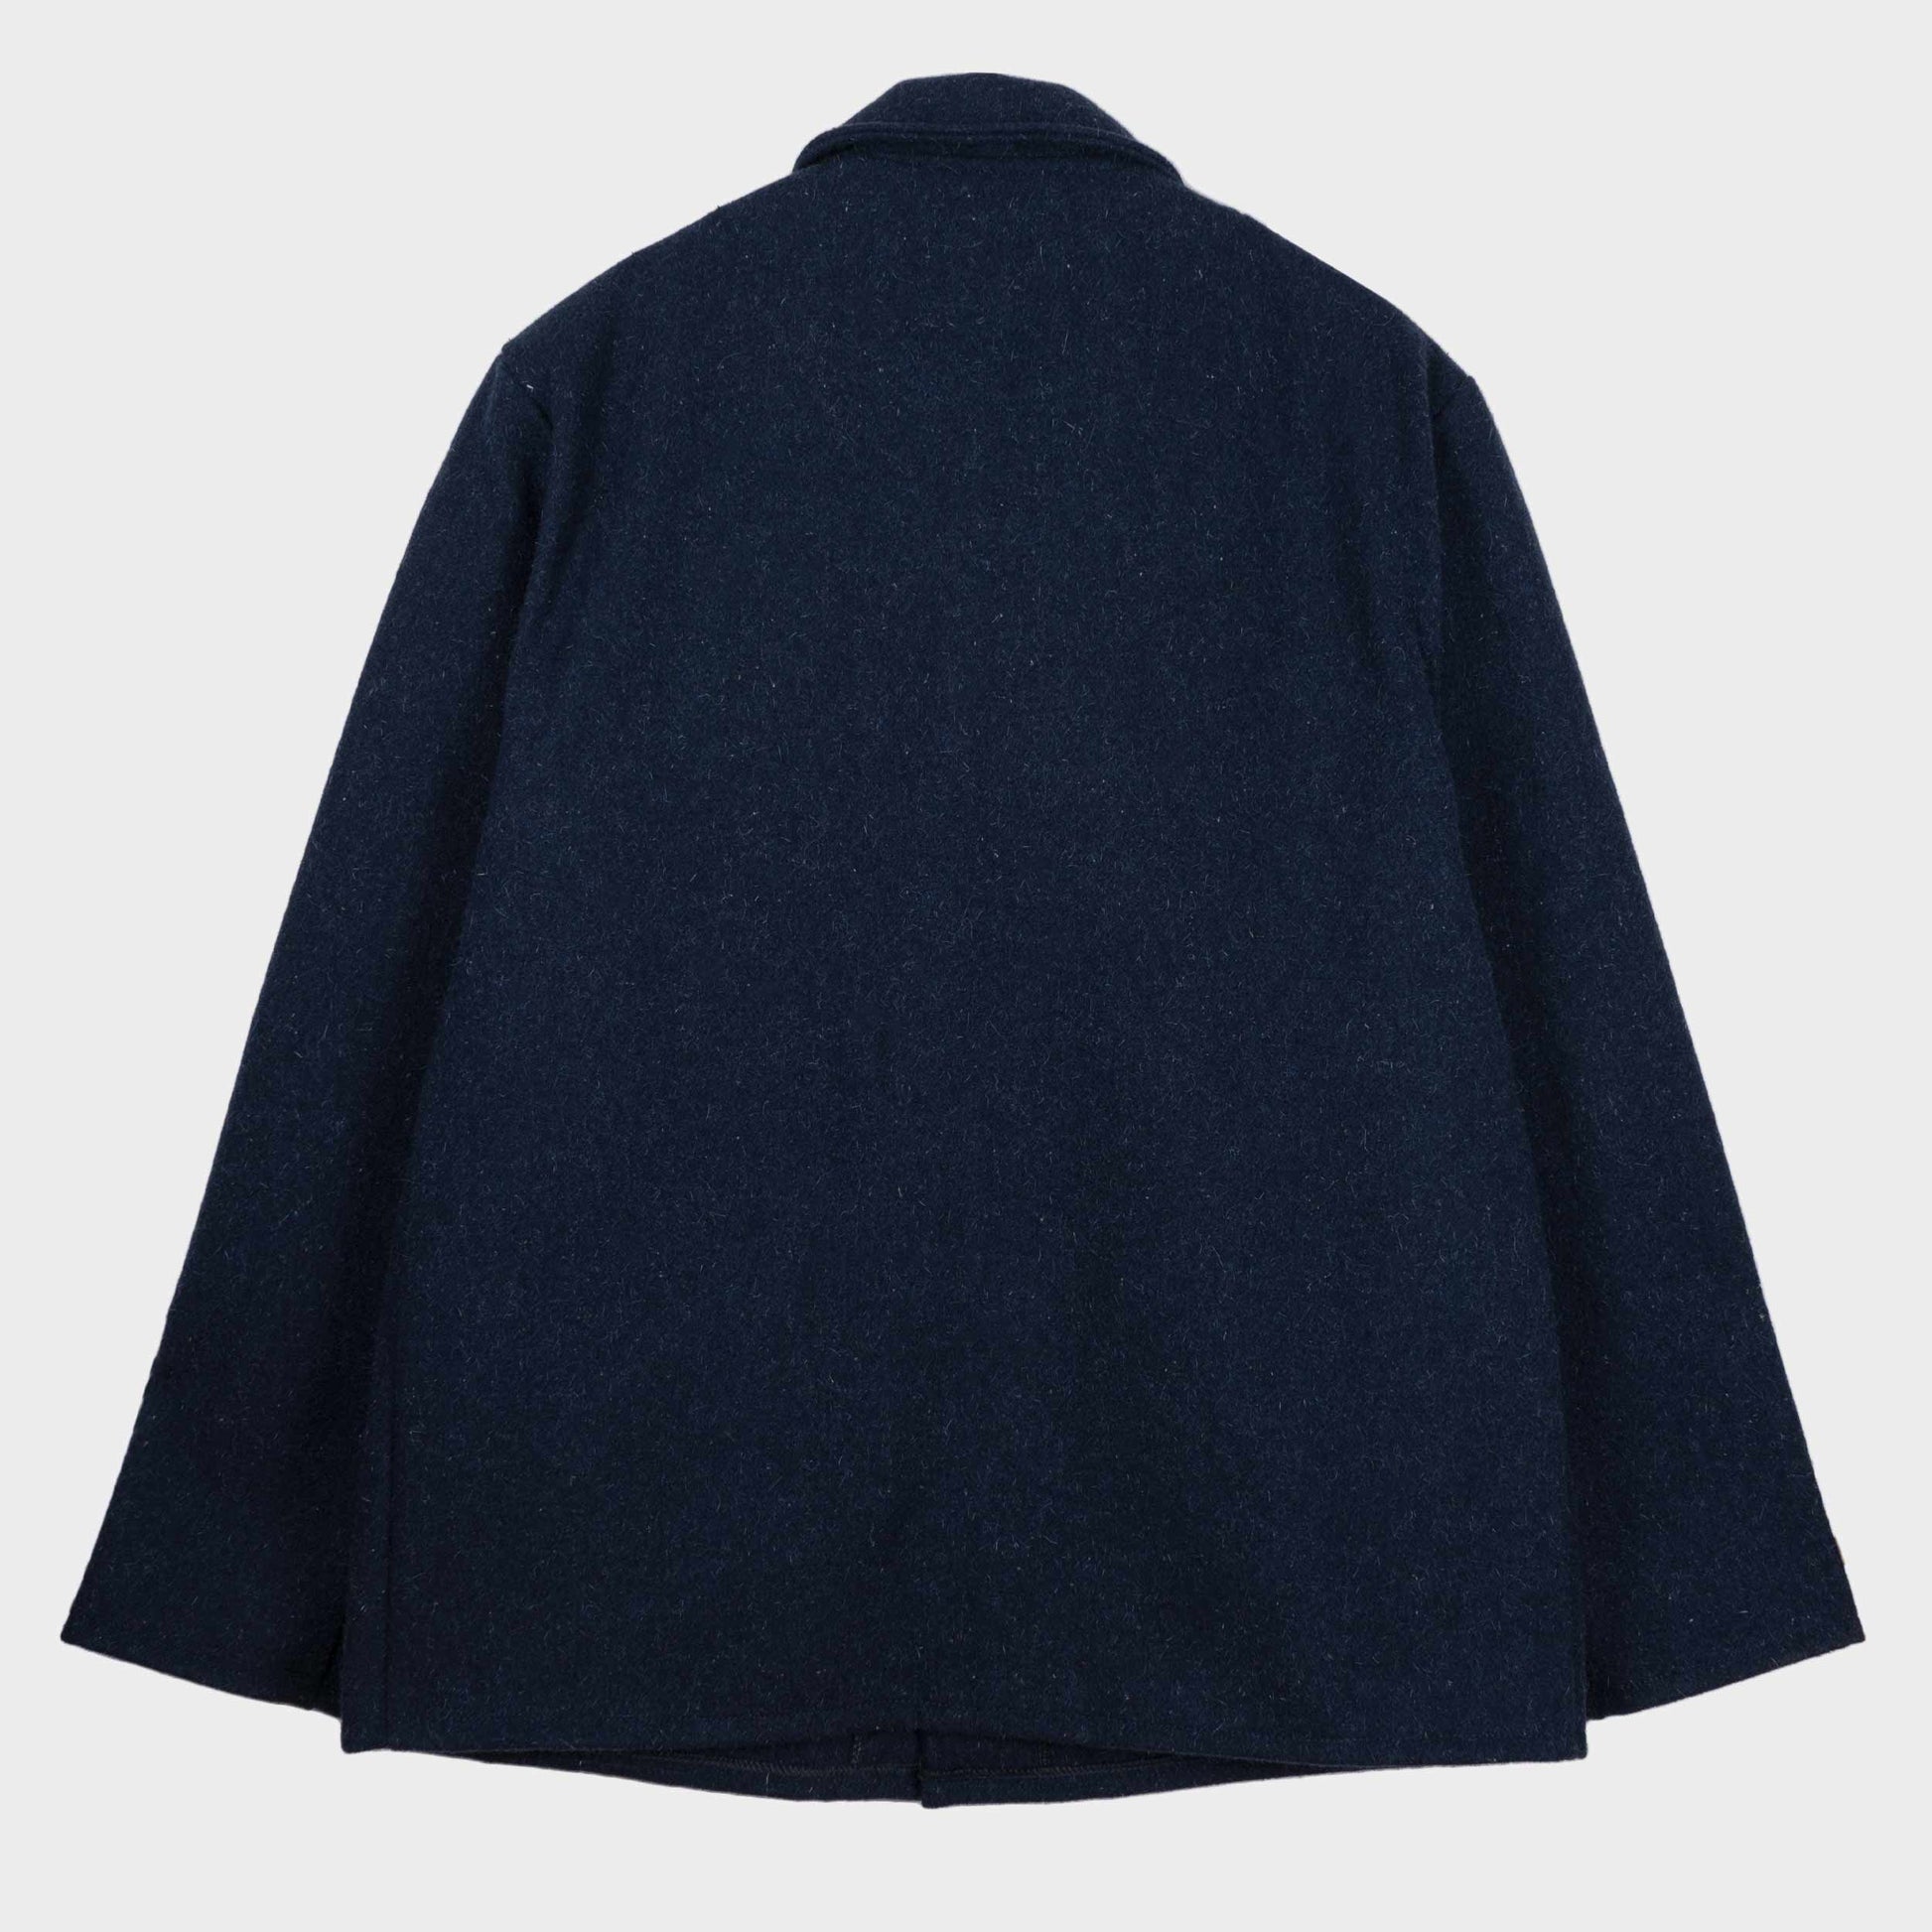 Le Laboureur French Wool Field Coat in Navy Blue